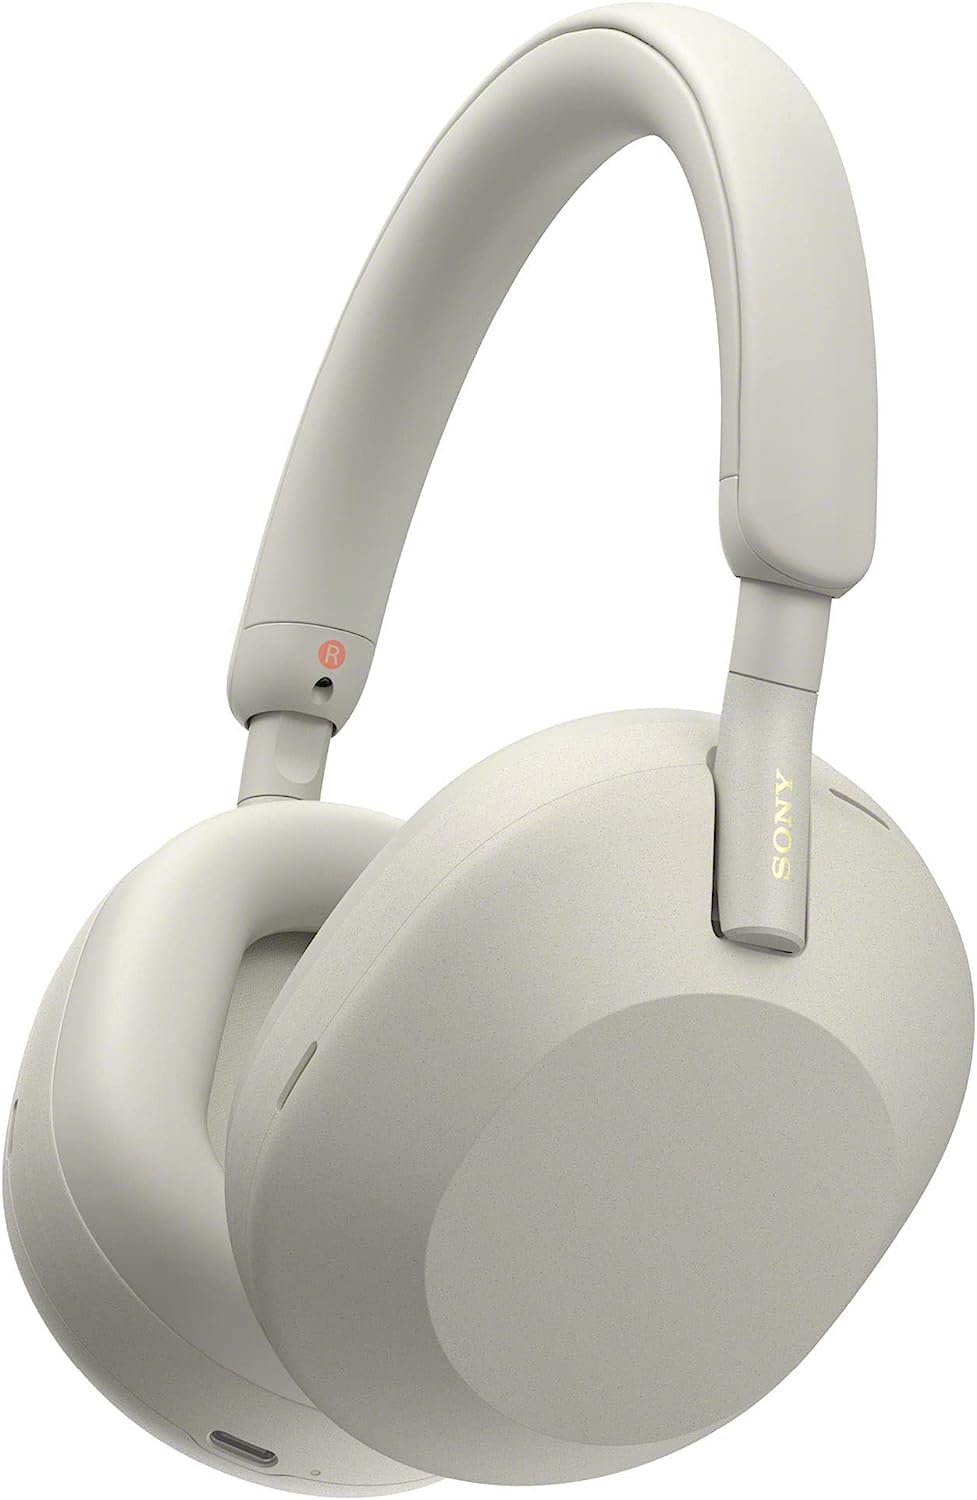 a set of white sony headphones